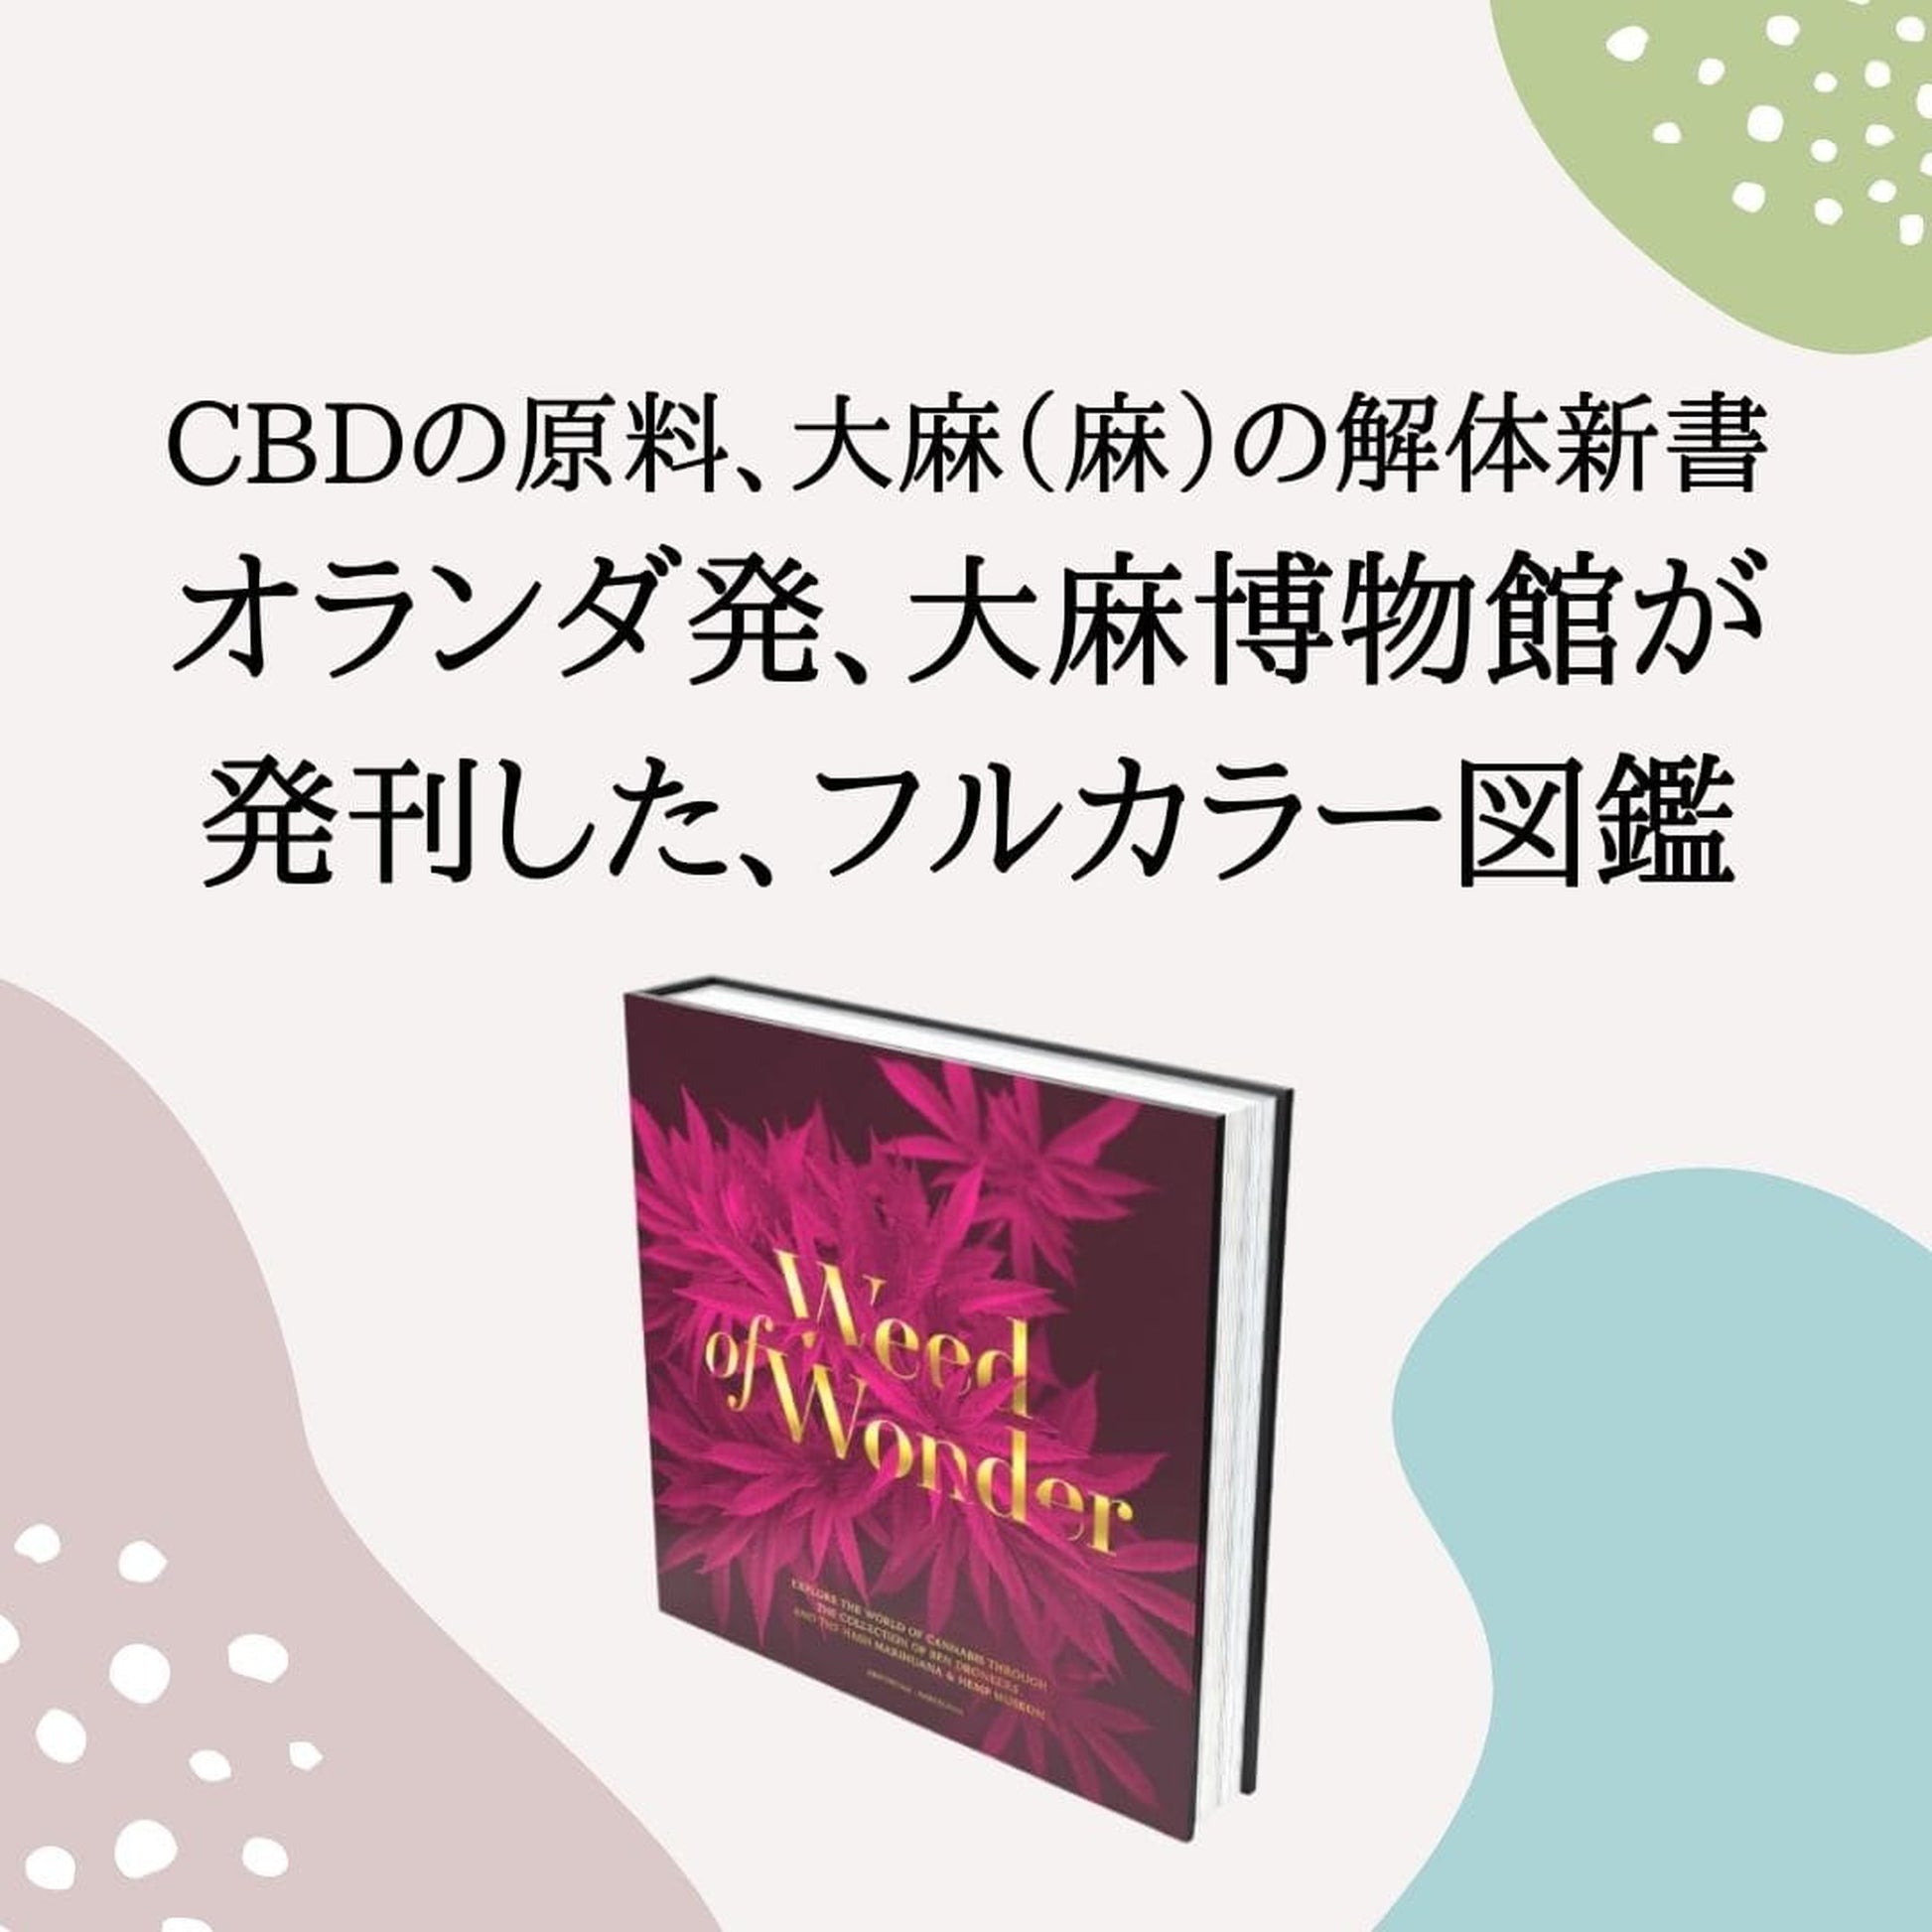 ［Weed of Wonder］ハッシュマリファナ＆ヘンプ博物館 - CBD Library